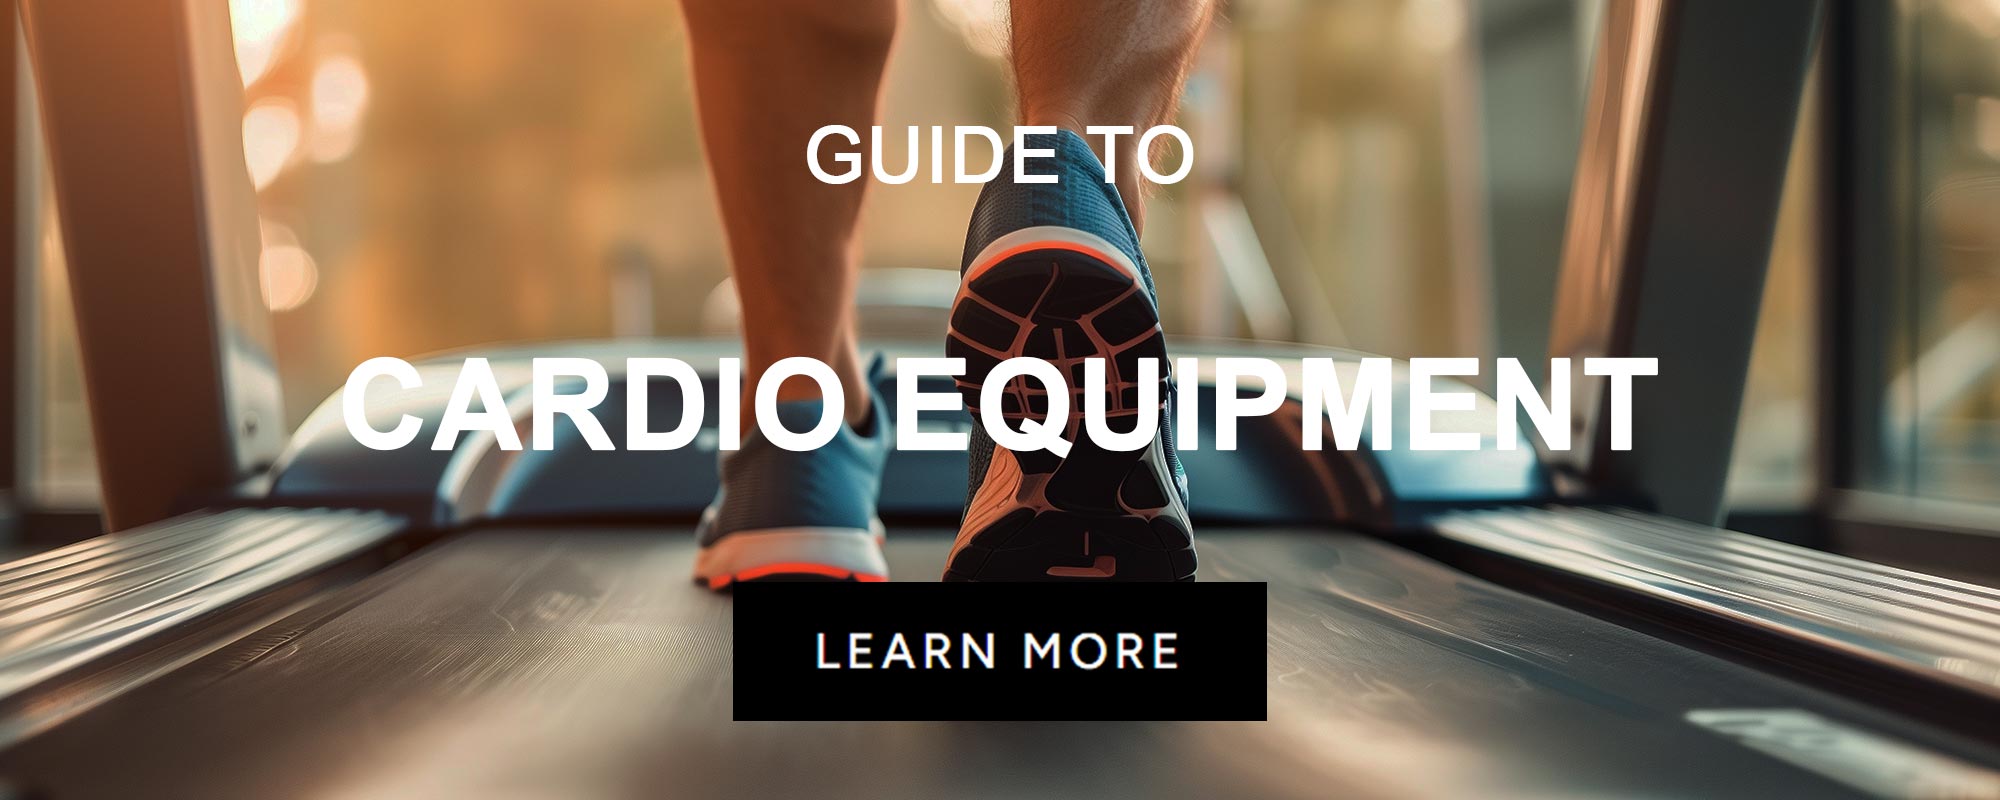 GUIDES_EQUIP_CardioEquipment.jpg